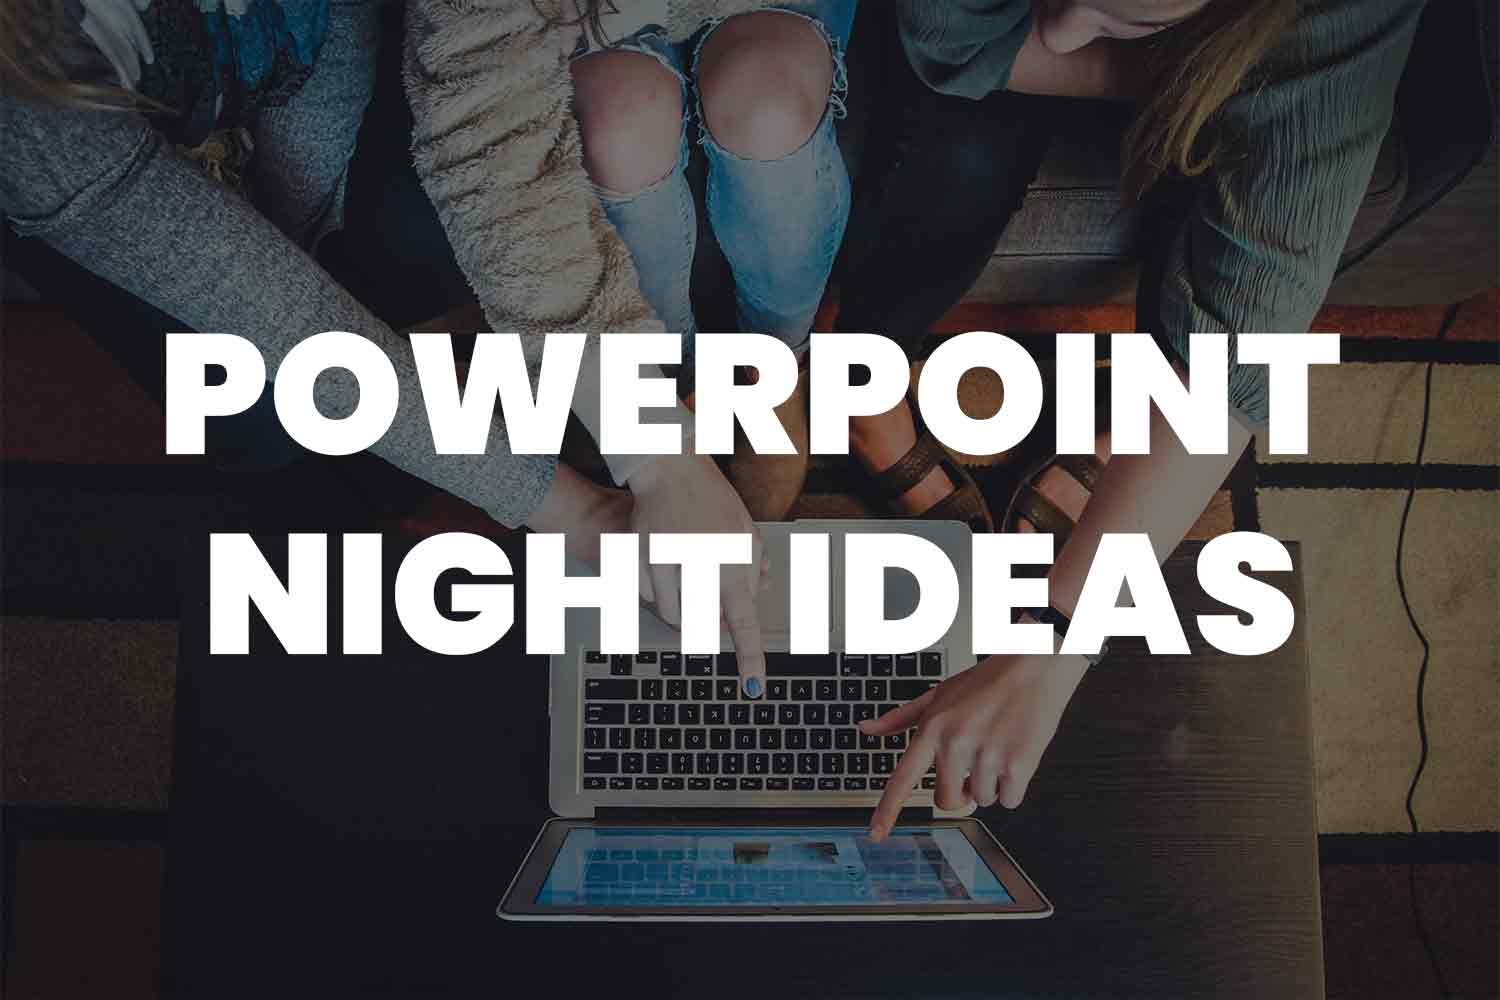 presentation ideas for powerpoint night